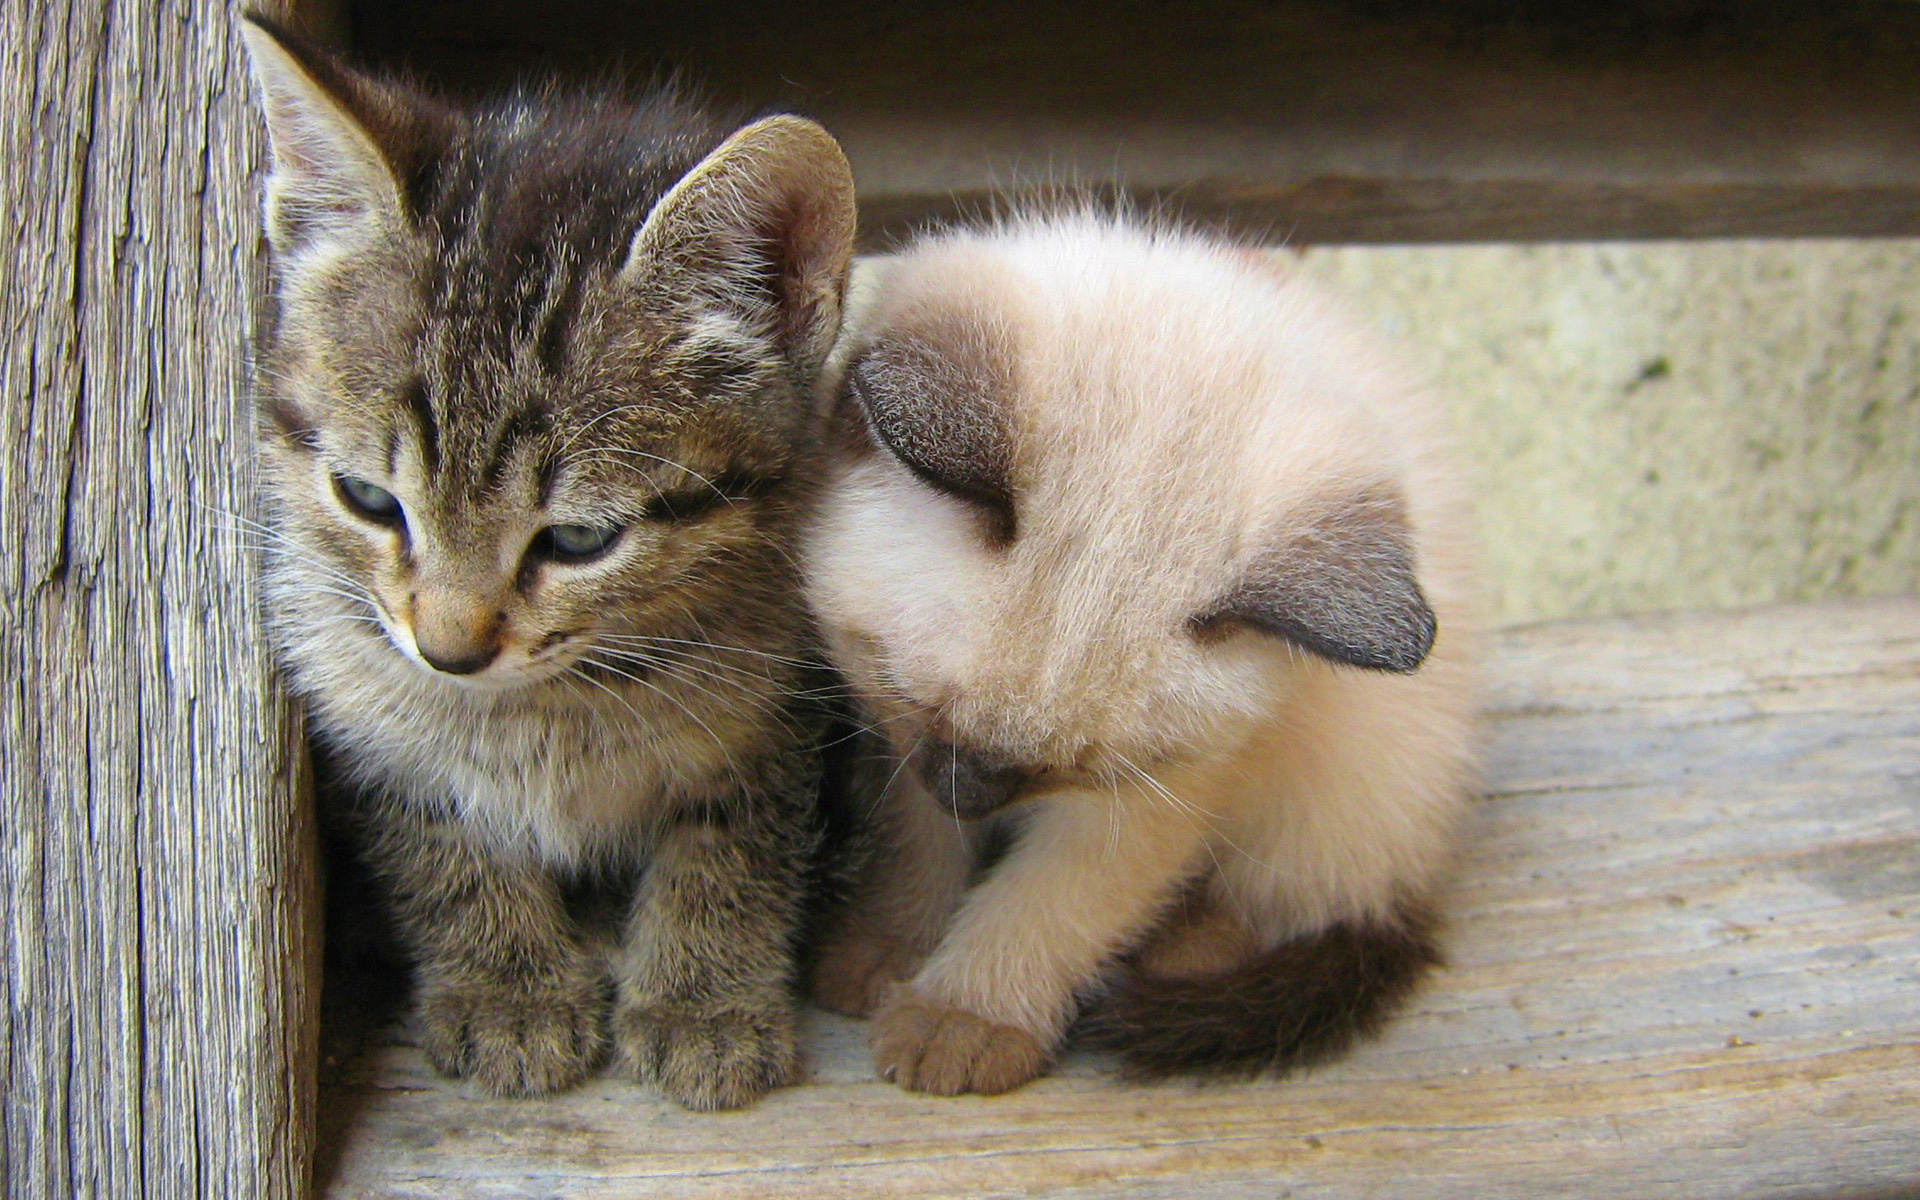 kittens cute images - HD Desktop Wallpapers | 4k HD